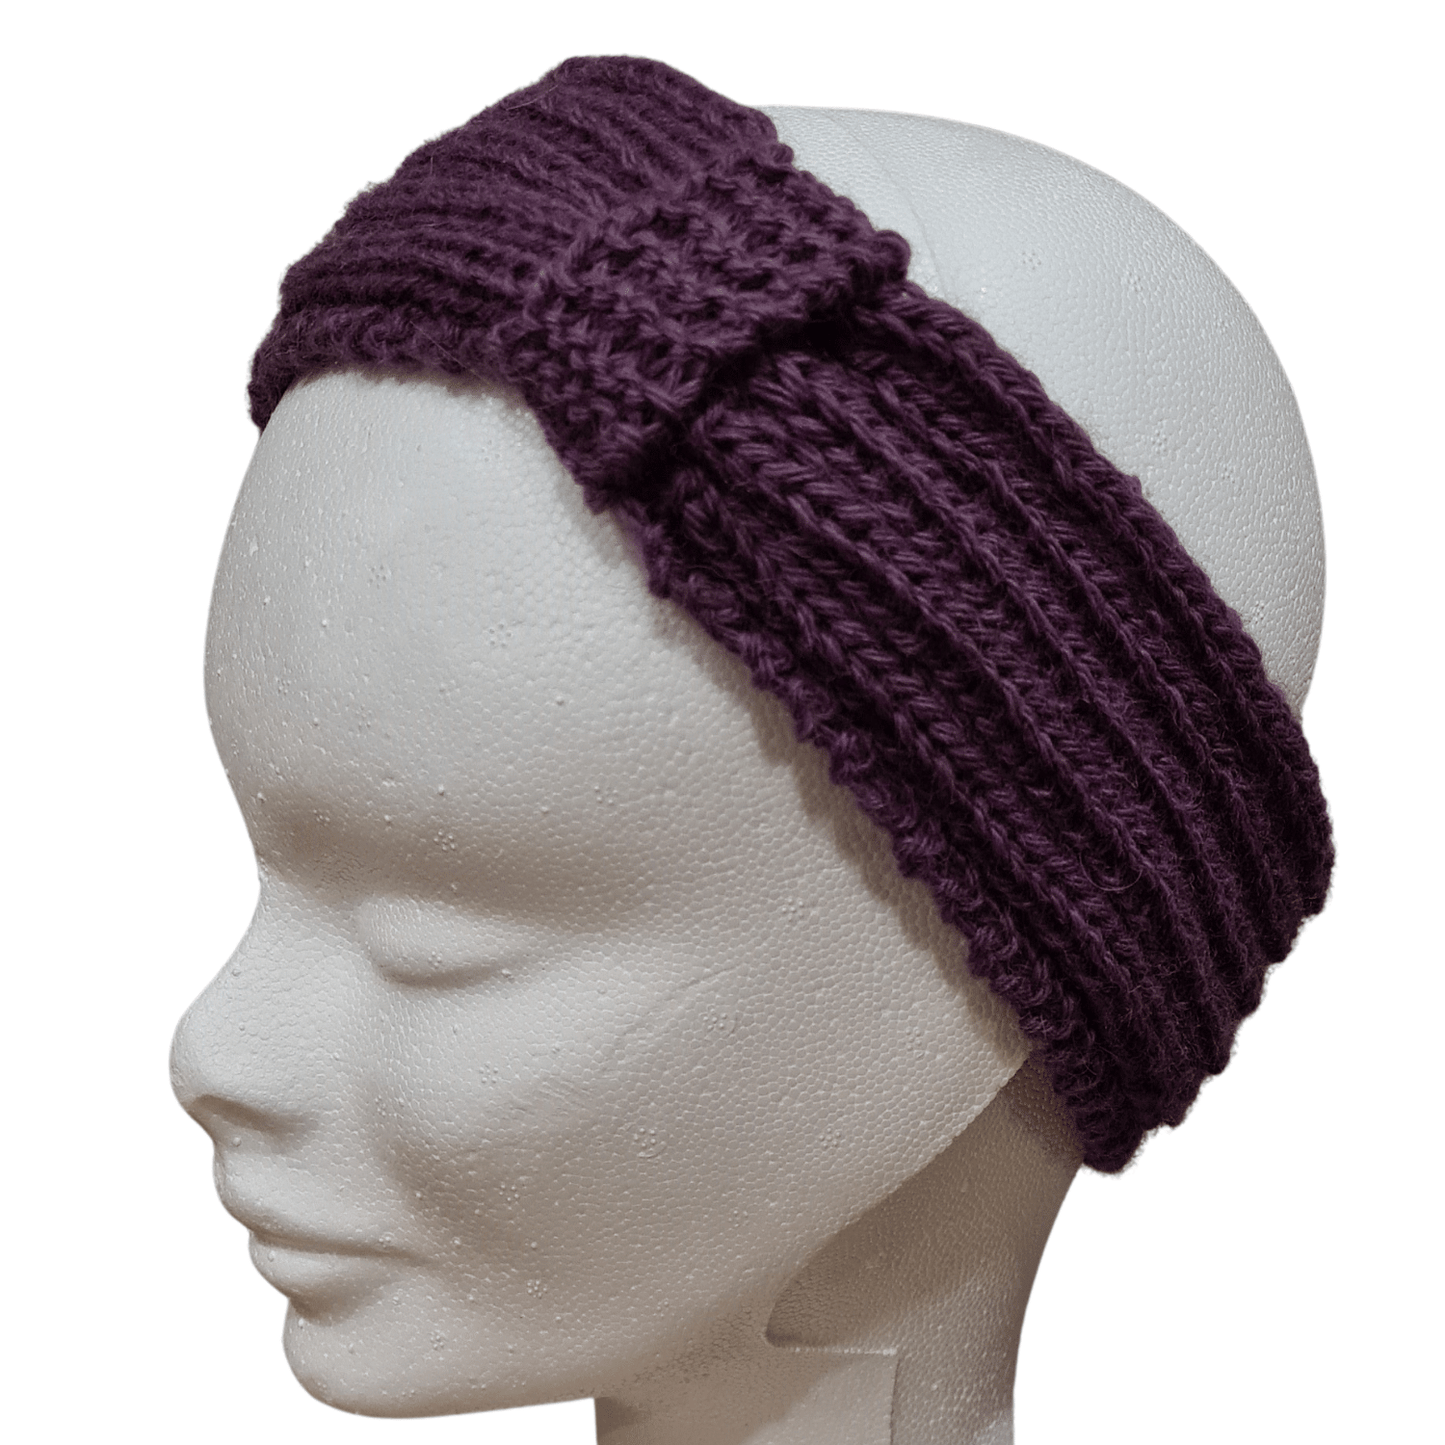 Alpaca knit kit headband in DK Damson